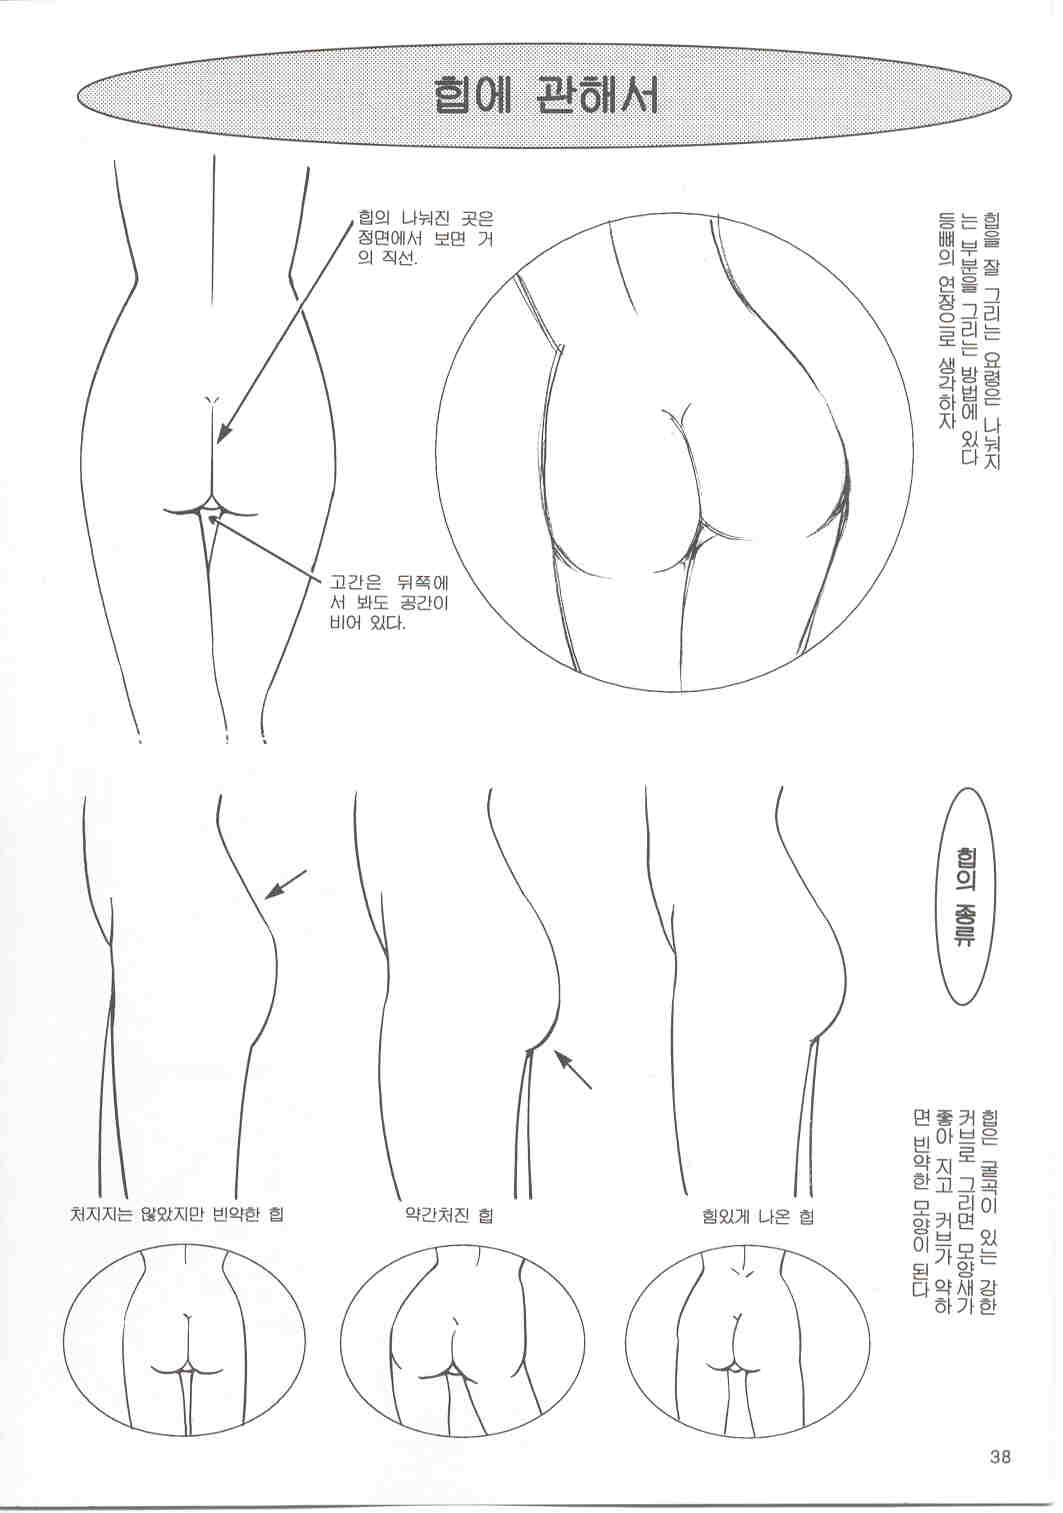 How to draw girls 1 (korean) 